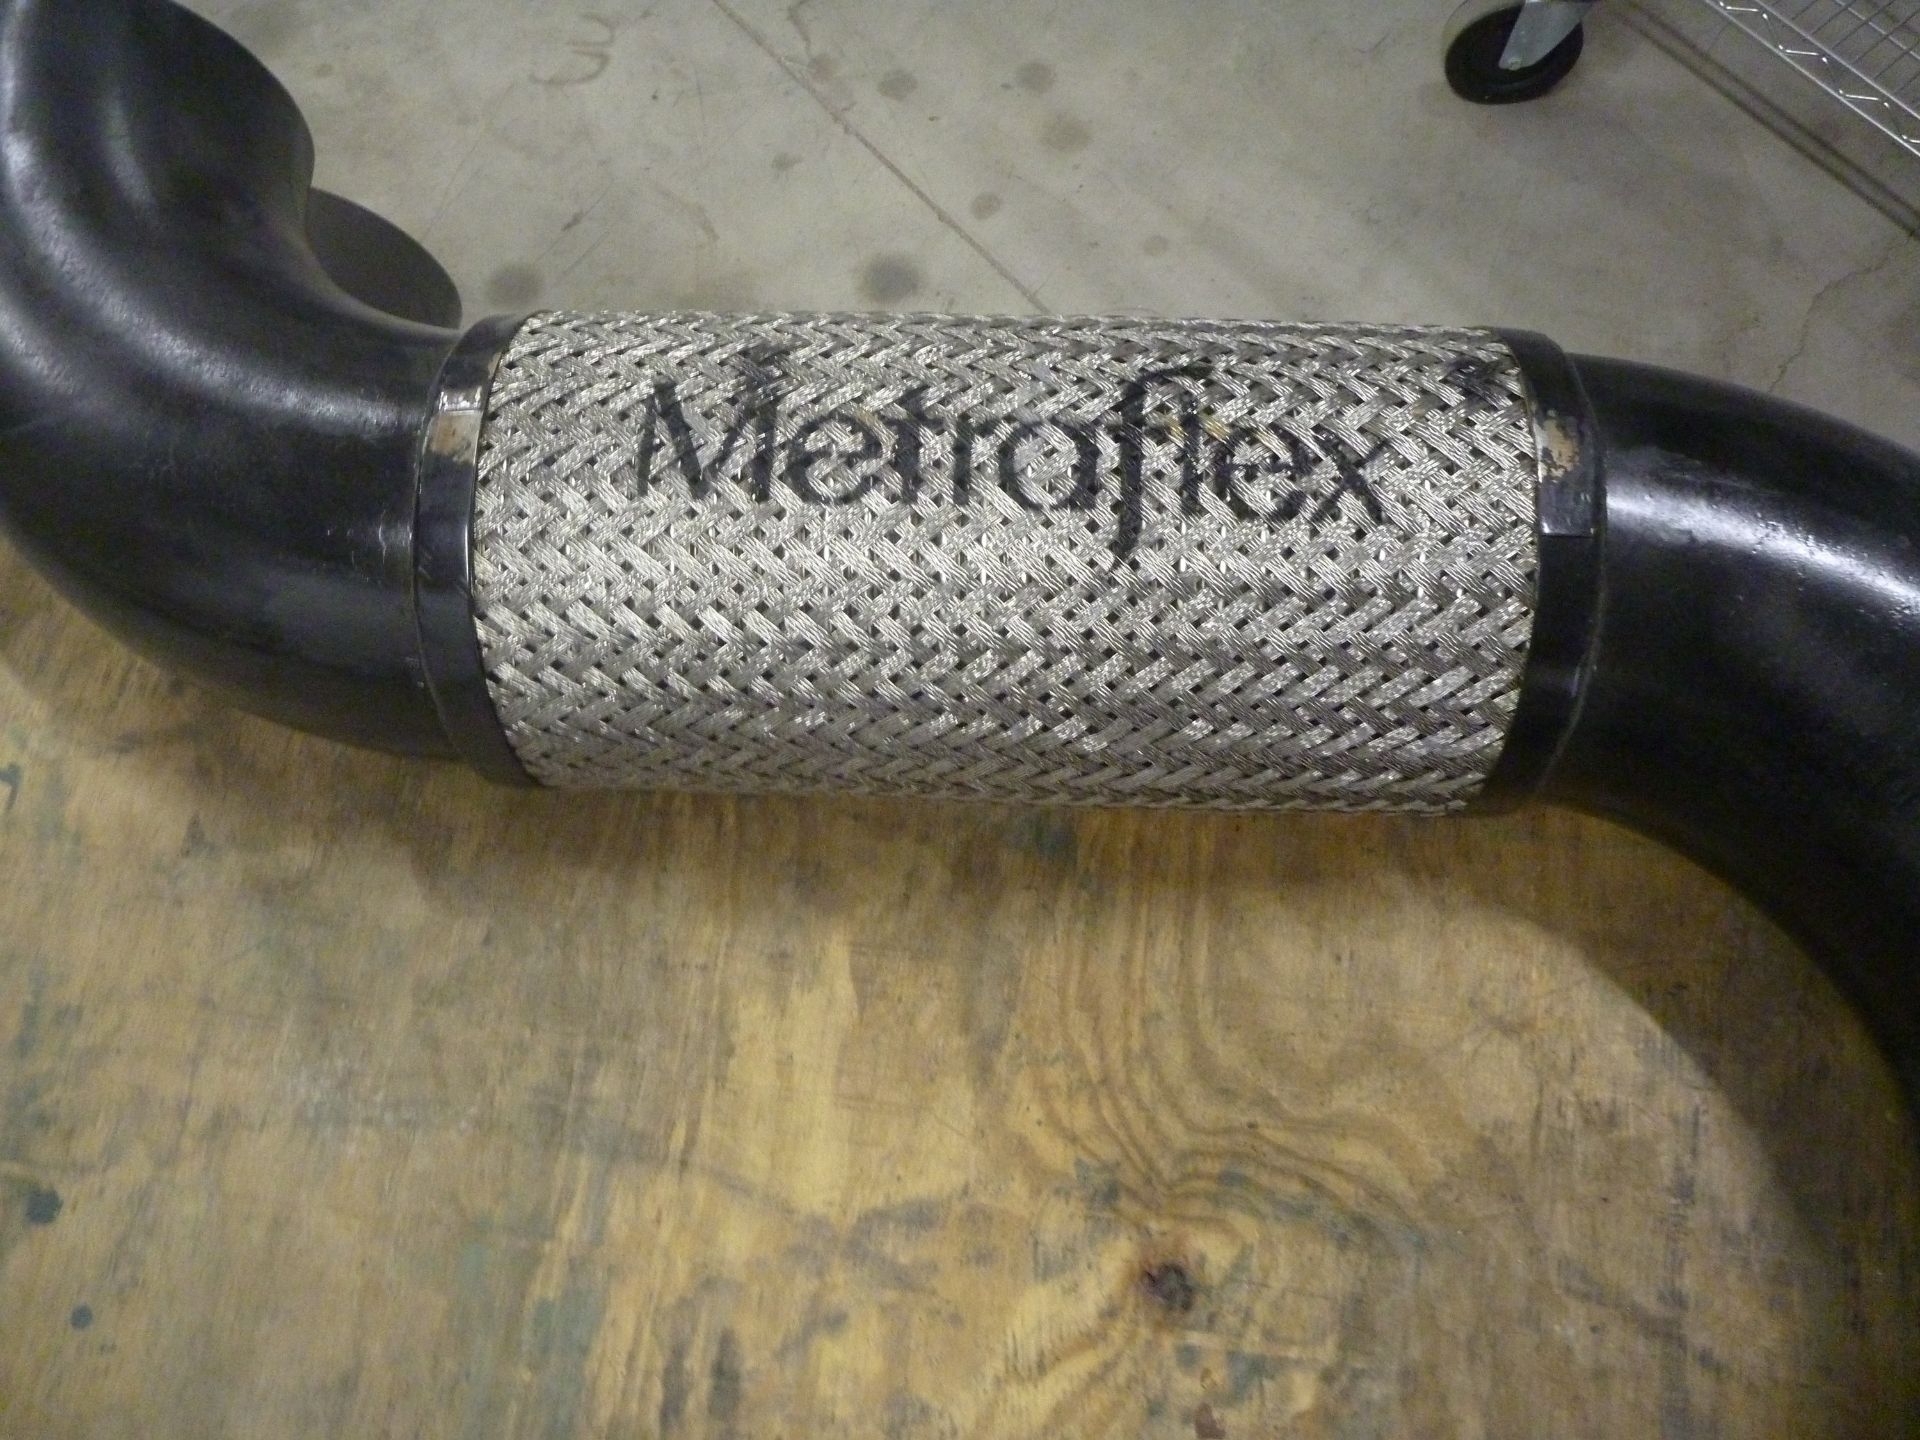 Lot of 2 Metraflex Metraloop expansion joints - Image 2 of 2